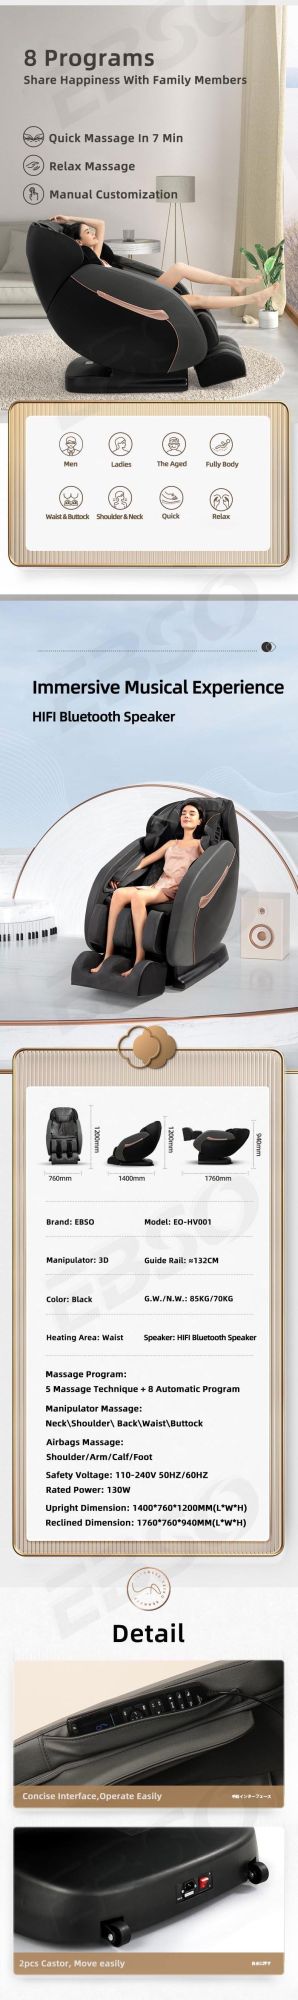 Zero Gravity Electric Multi-Function Health Full Body Airport Massage Chair